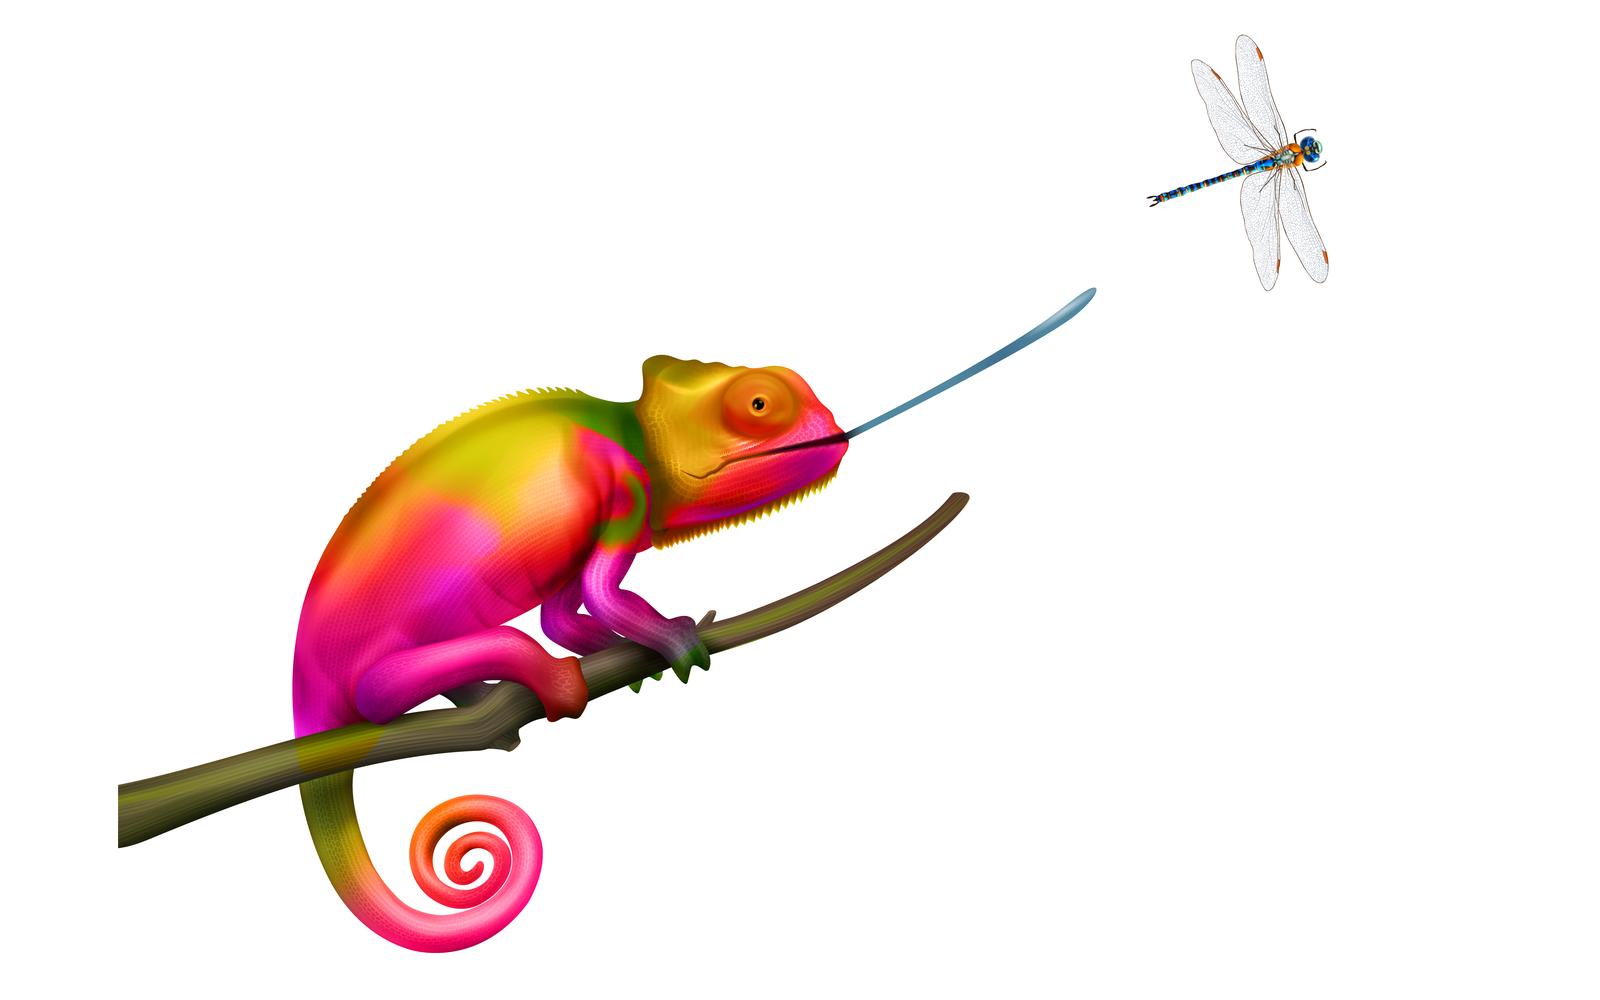 Chameleon Hunting Realistic 201021120 Vector Illustration Concept